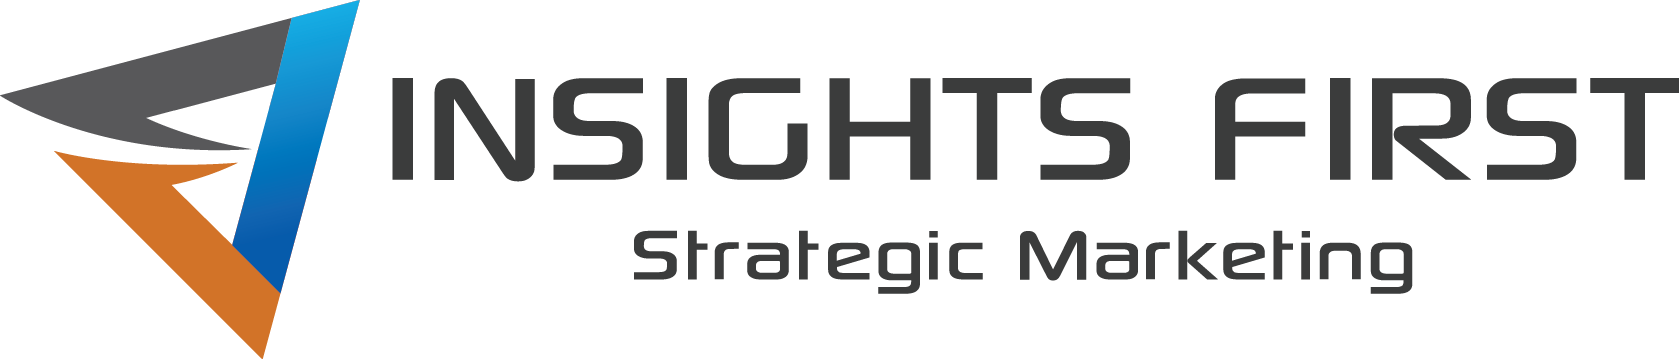 Insights First Strategic Marketing